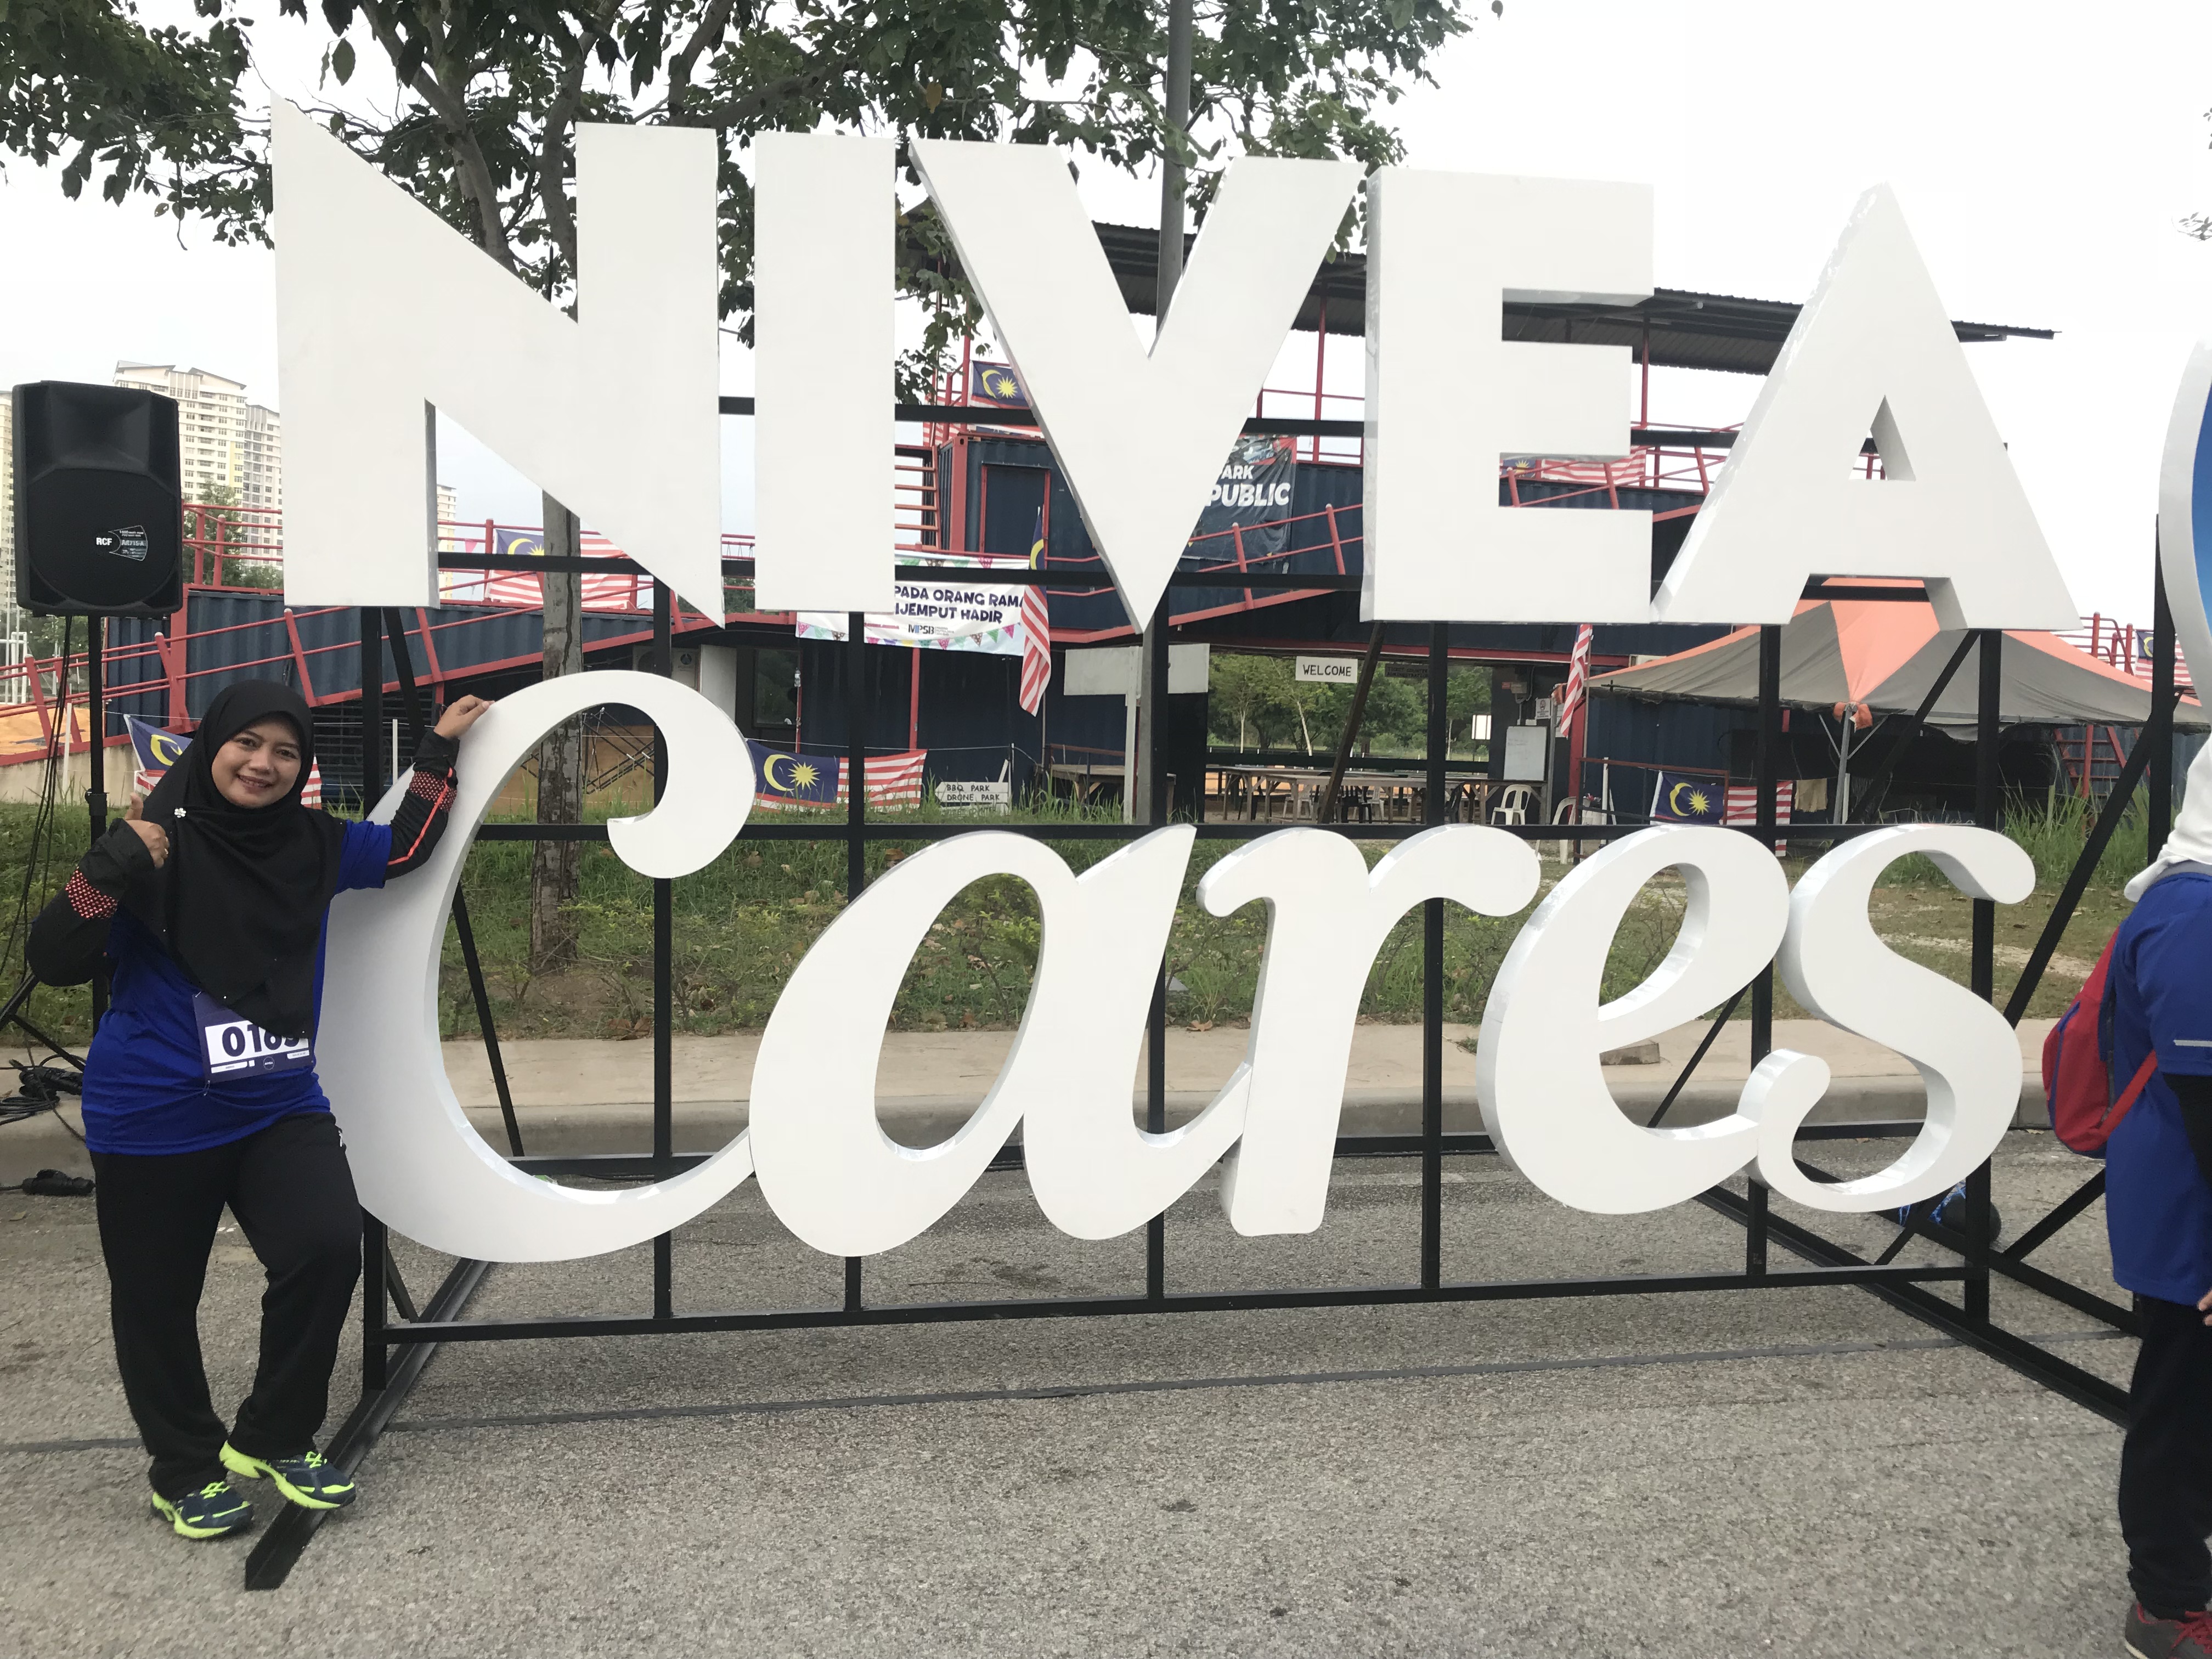 Nivea Care Run 2017 at Kompleks Sukan Air Putrajaya- Protect What You Care